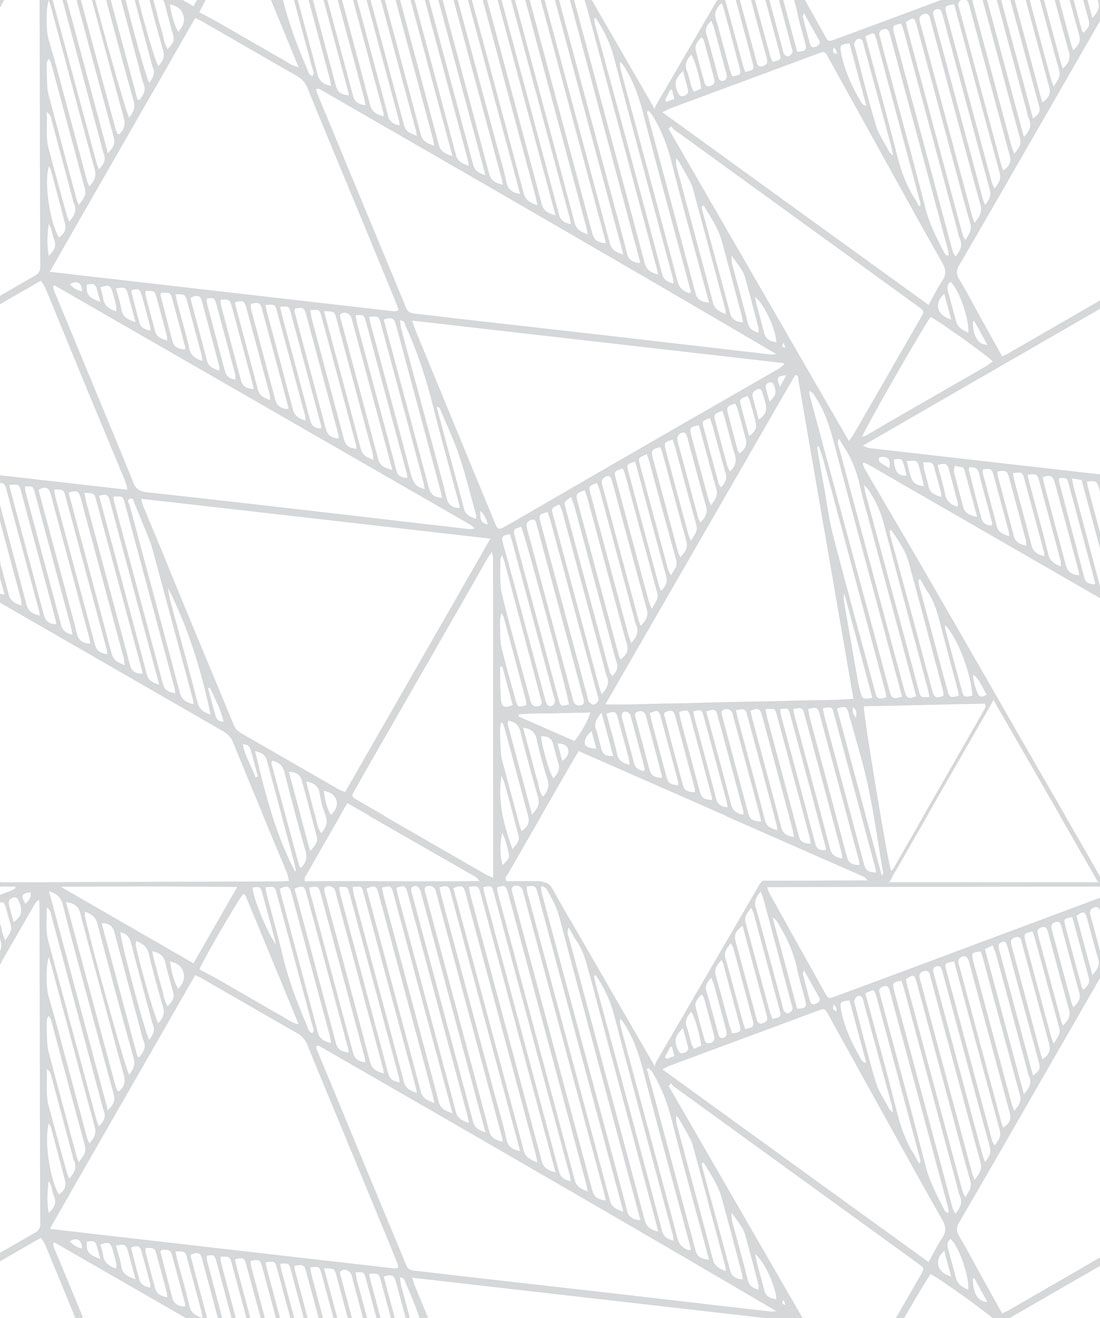 E&S Fracture Grey is a unique geometric wallpaper